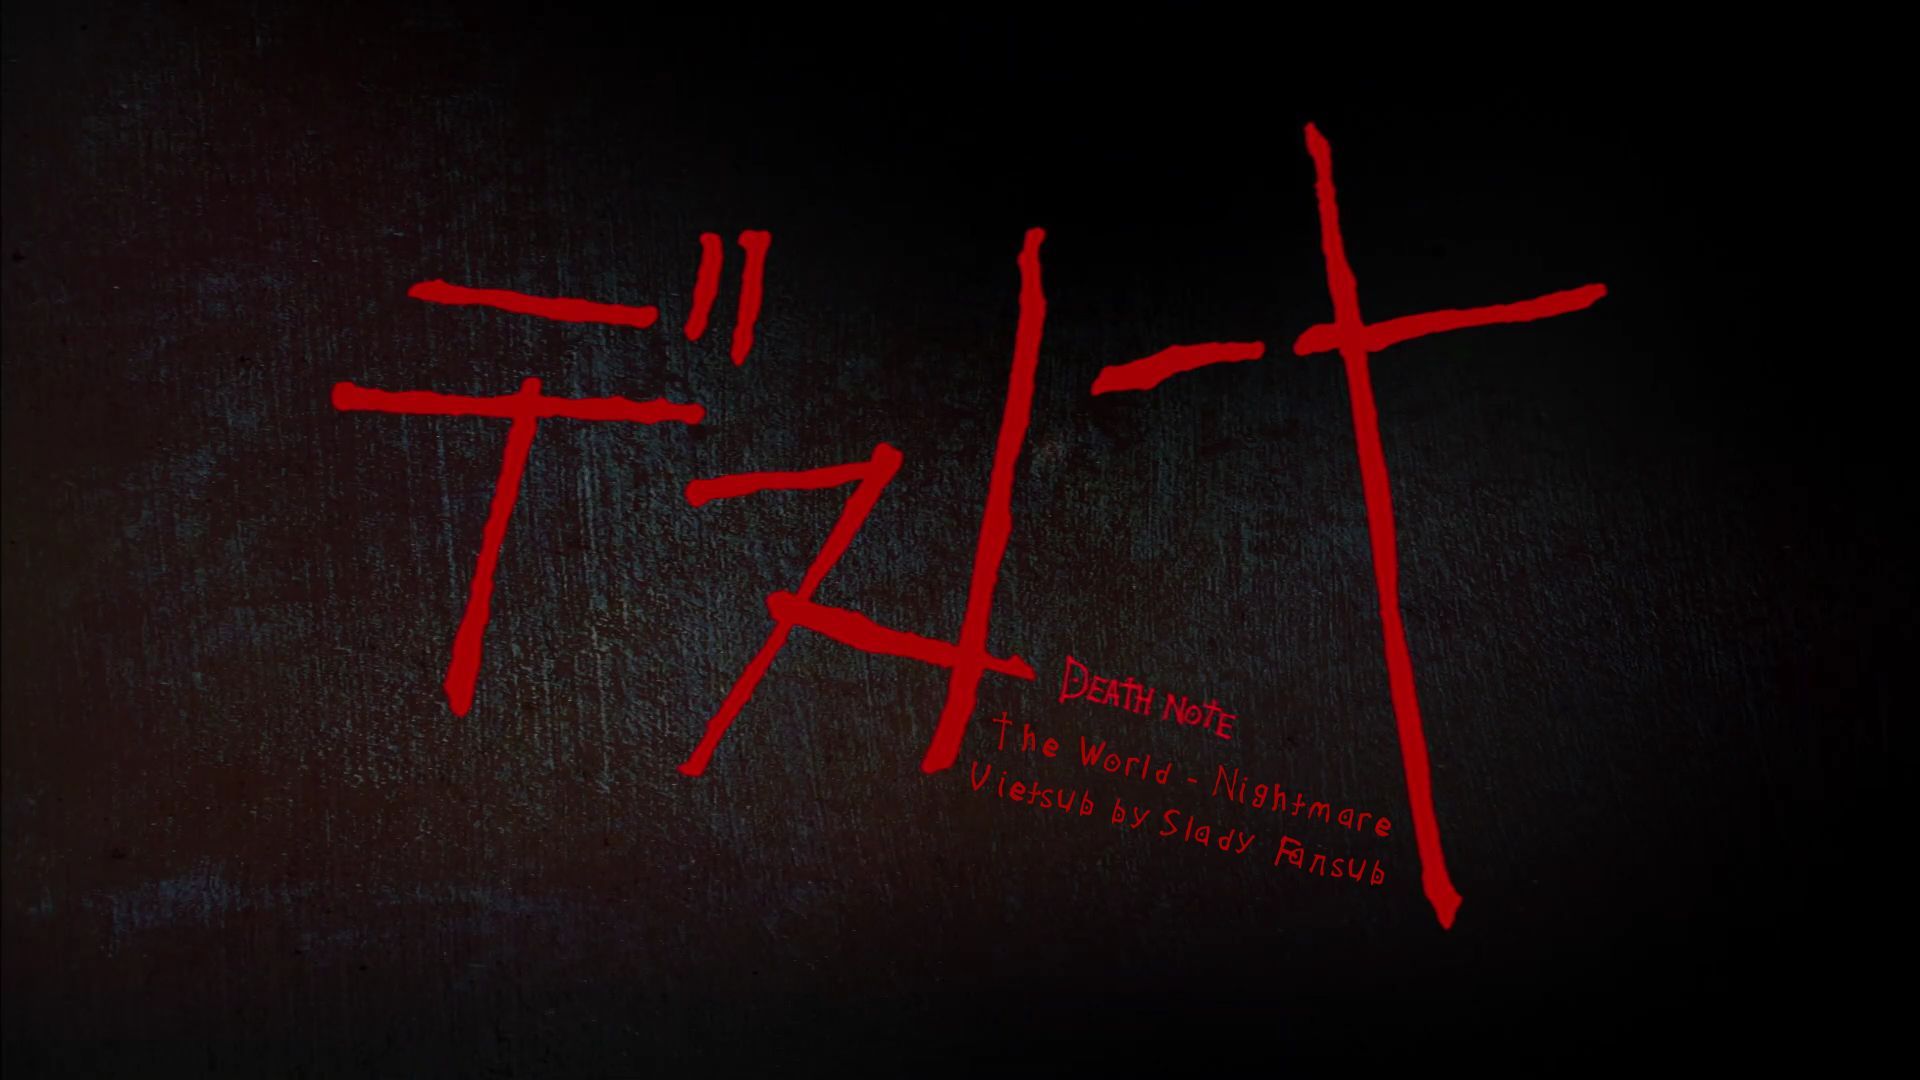 Vietsub] The World - Nightmare (Death Note Opening) - Bilibili